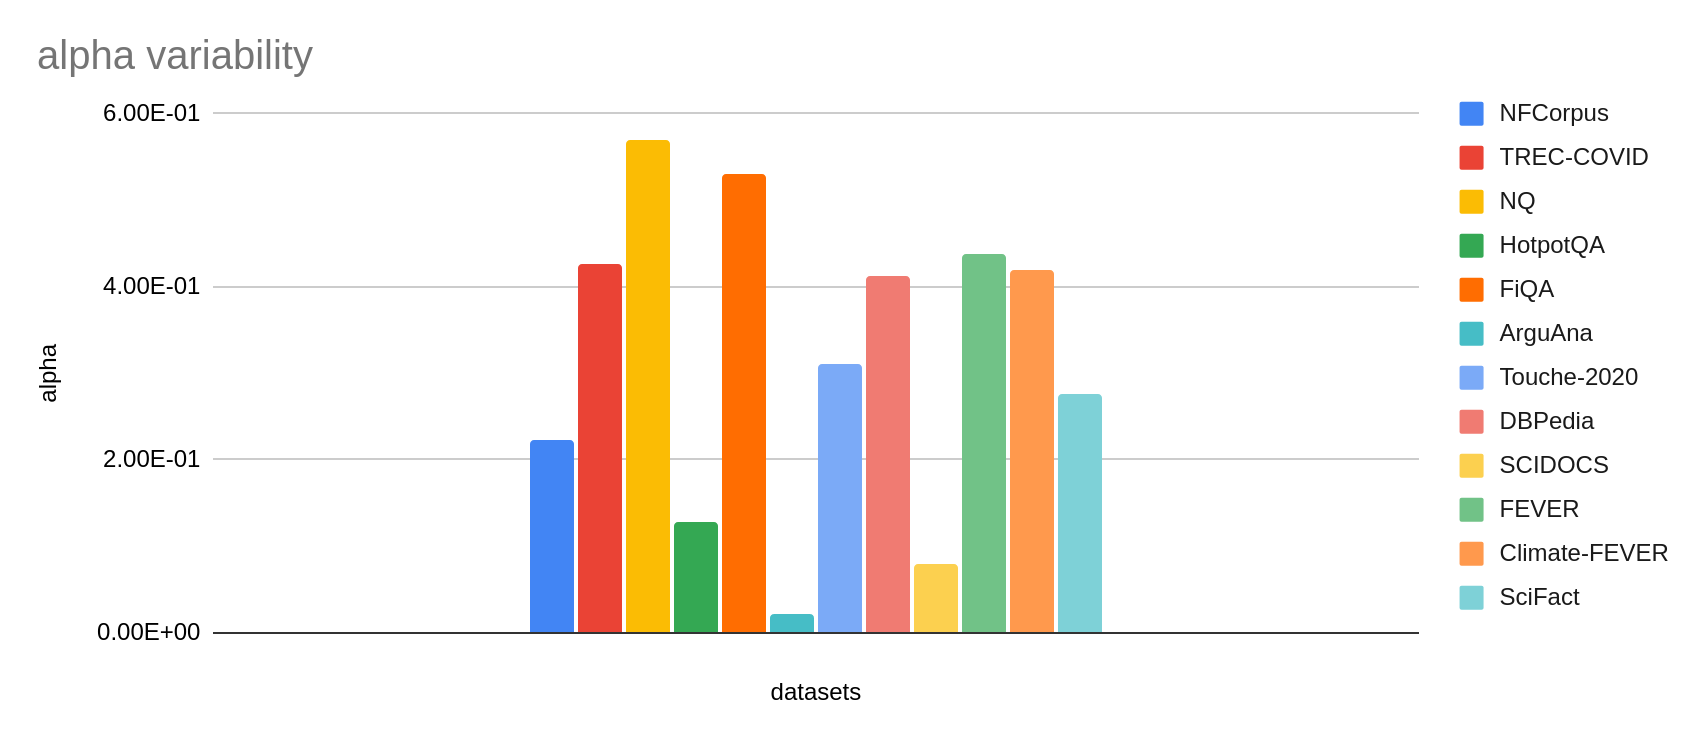  Variabilität bei den verschiedenen BEIR-Datasets